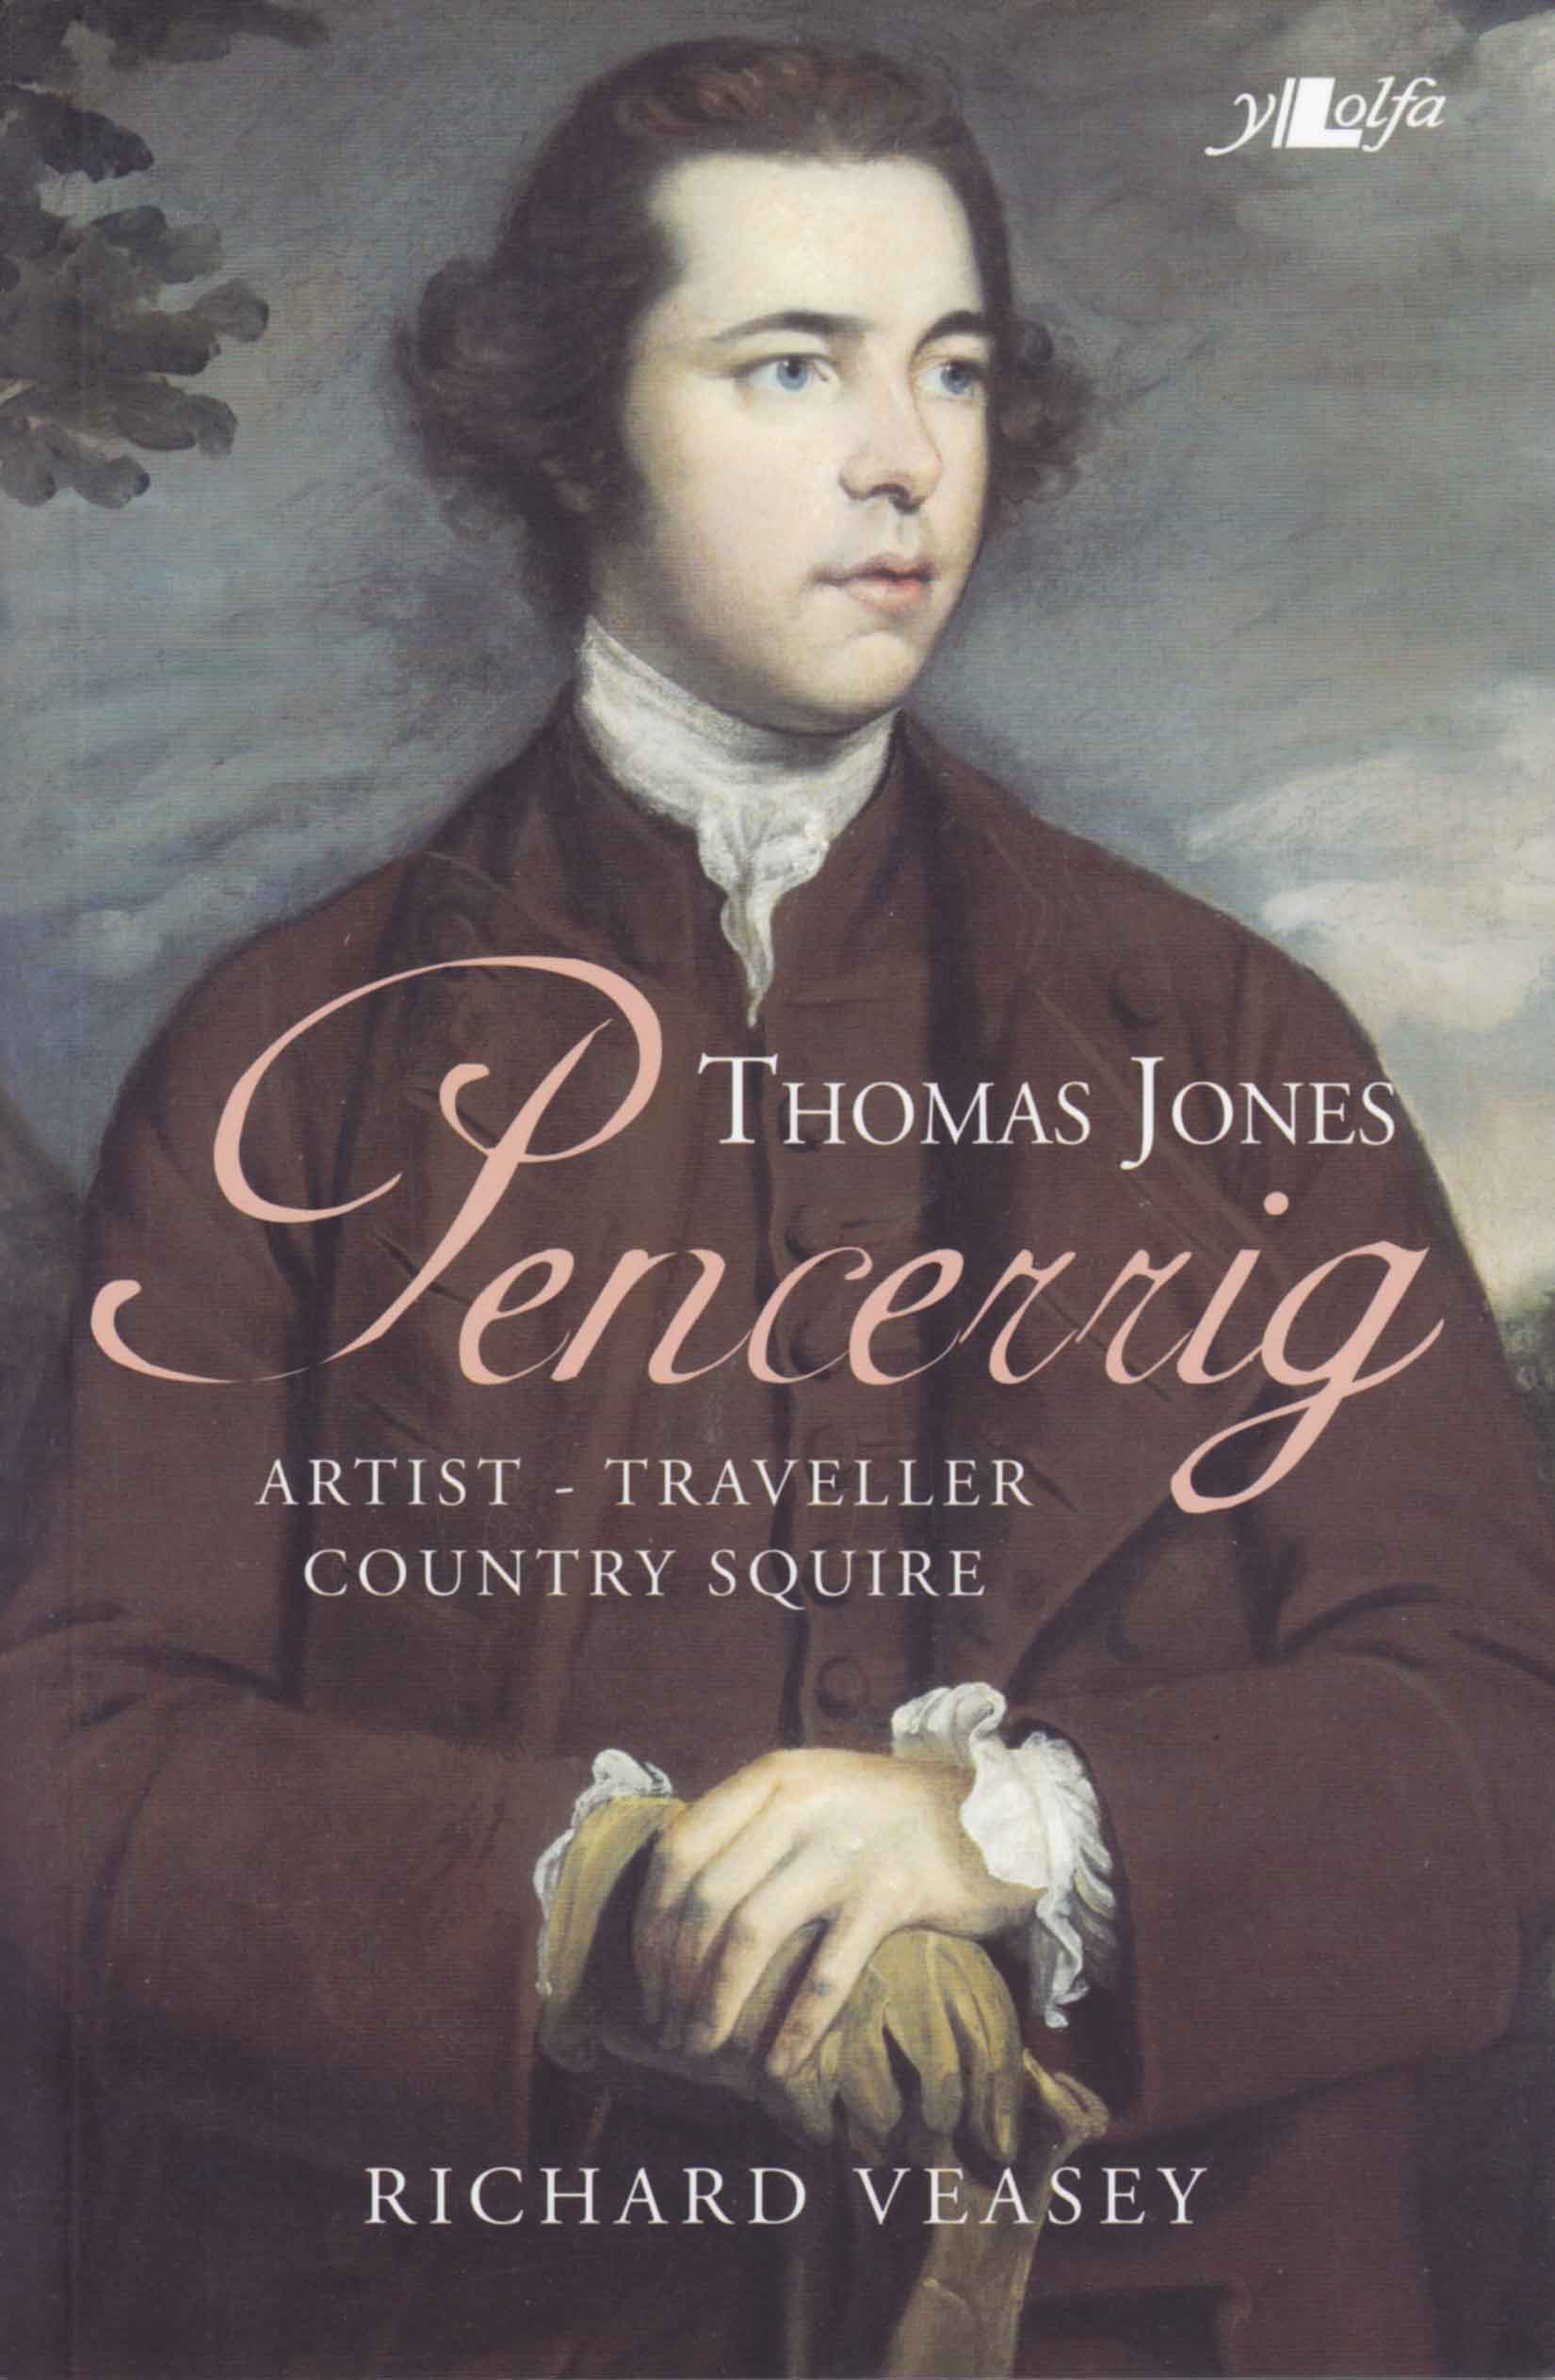 Thomas Jones Pencerrig: Artist, Traveller, Country Squire